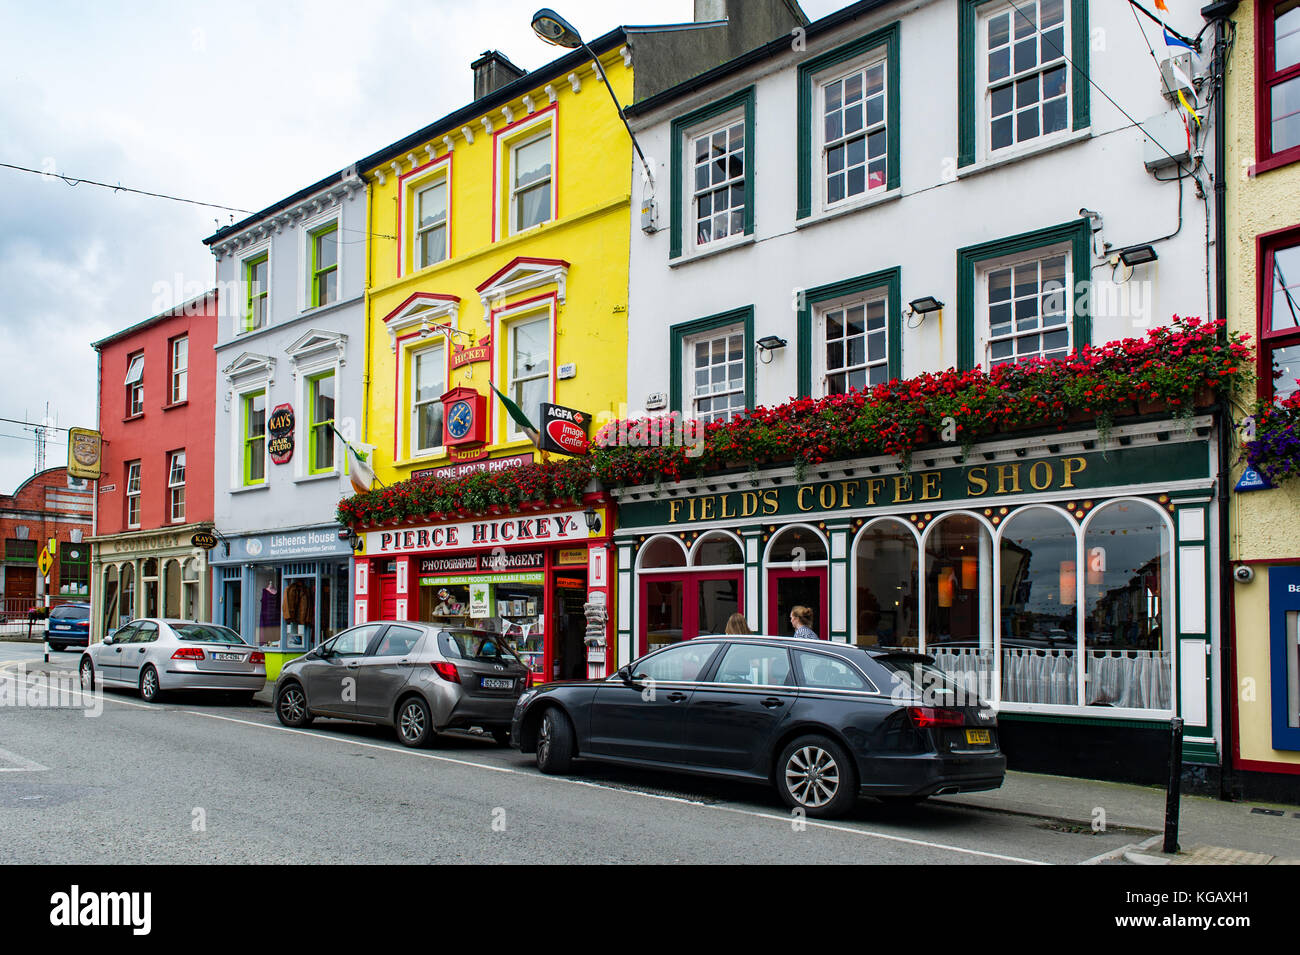 Skibbereen Main Street, Skibbereen, West Cork, Ireland with Fields Coffee Shop and Pierce Hickey Newsagents. Stock Photo